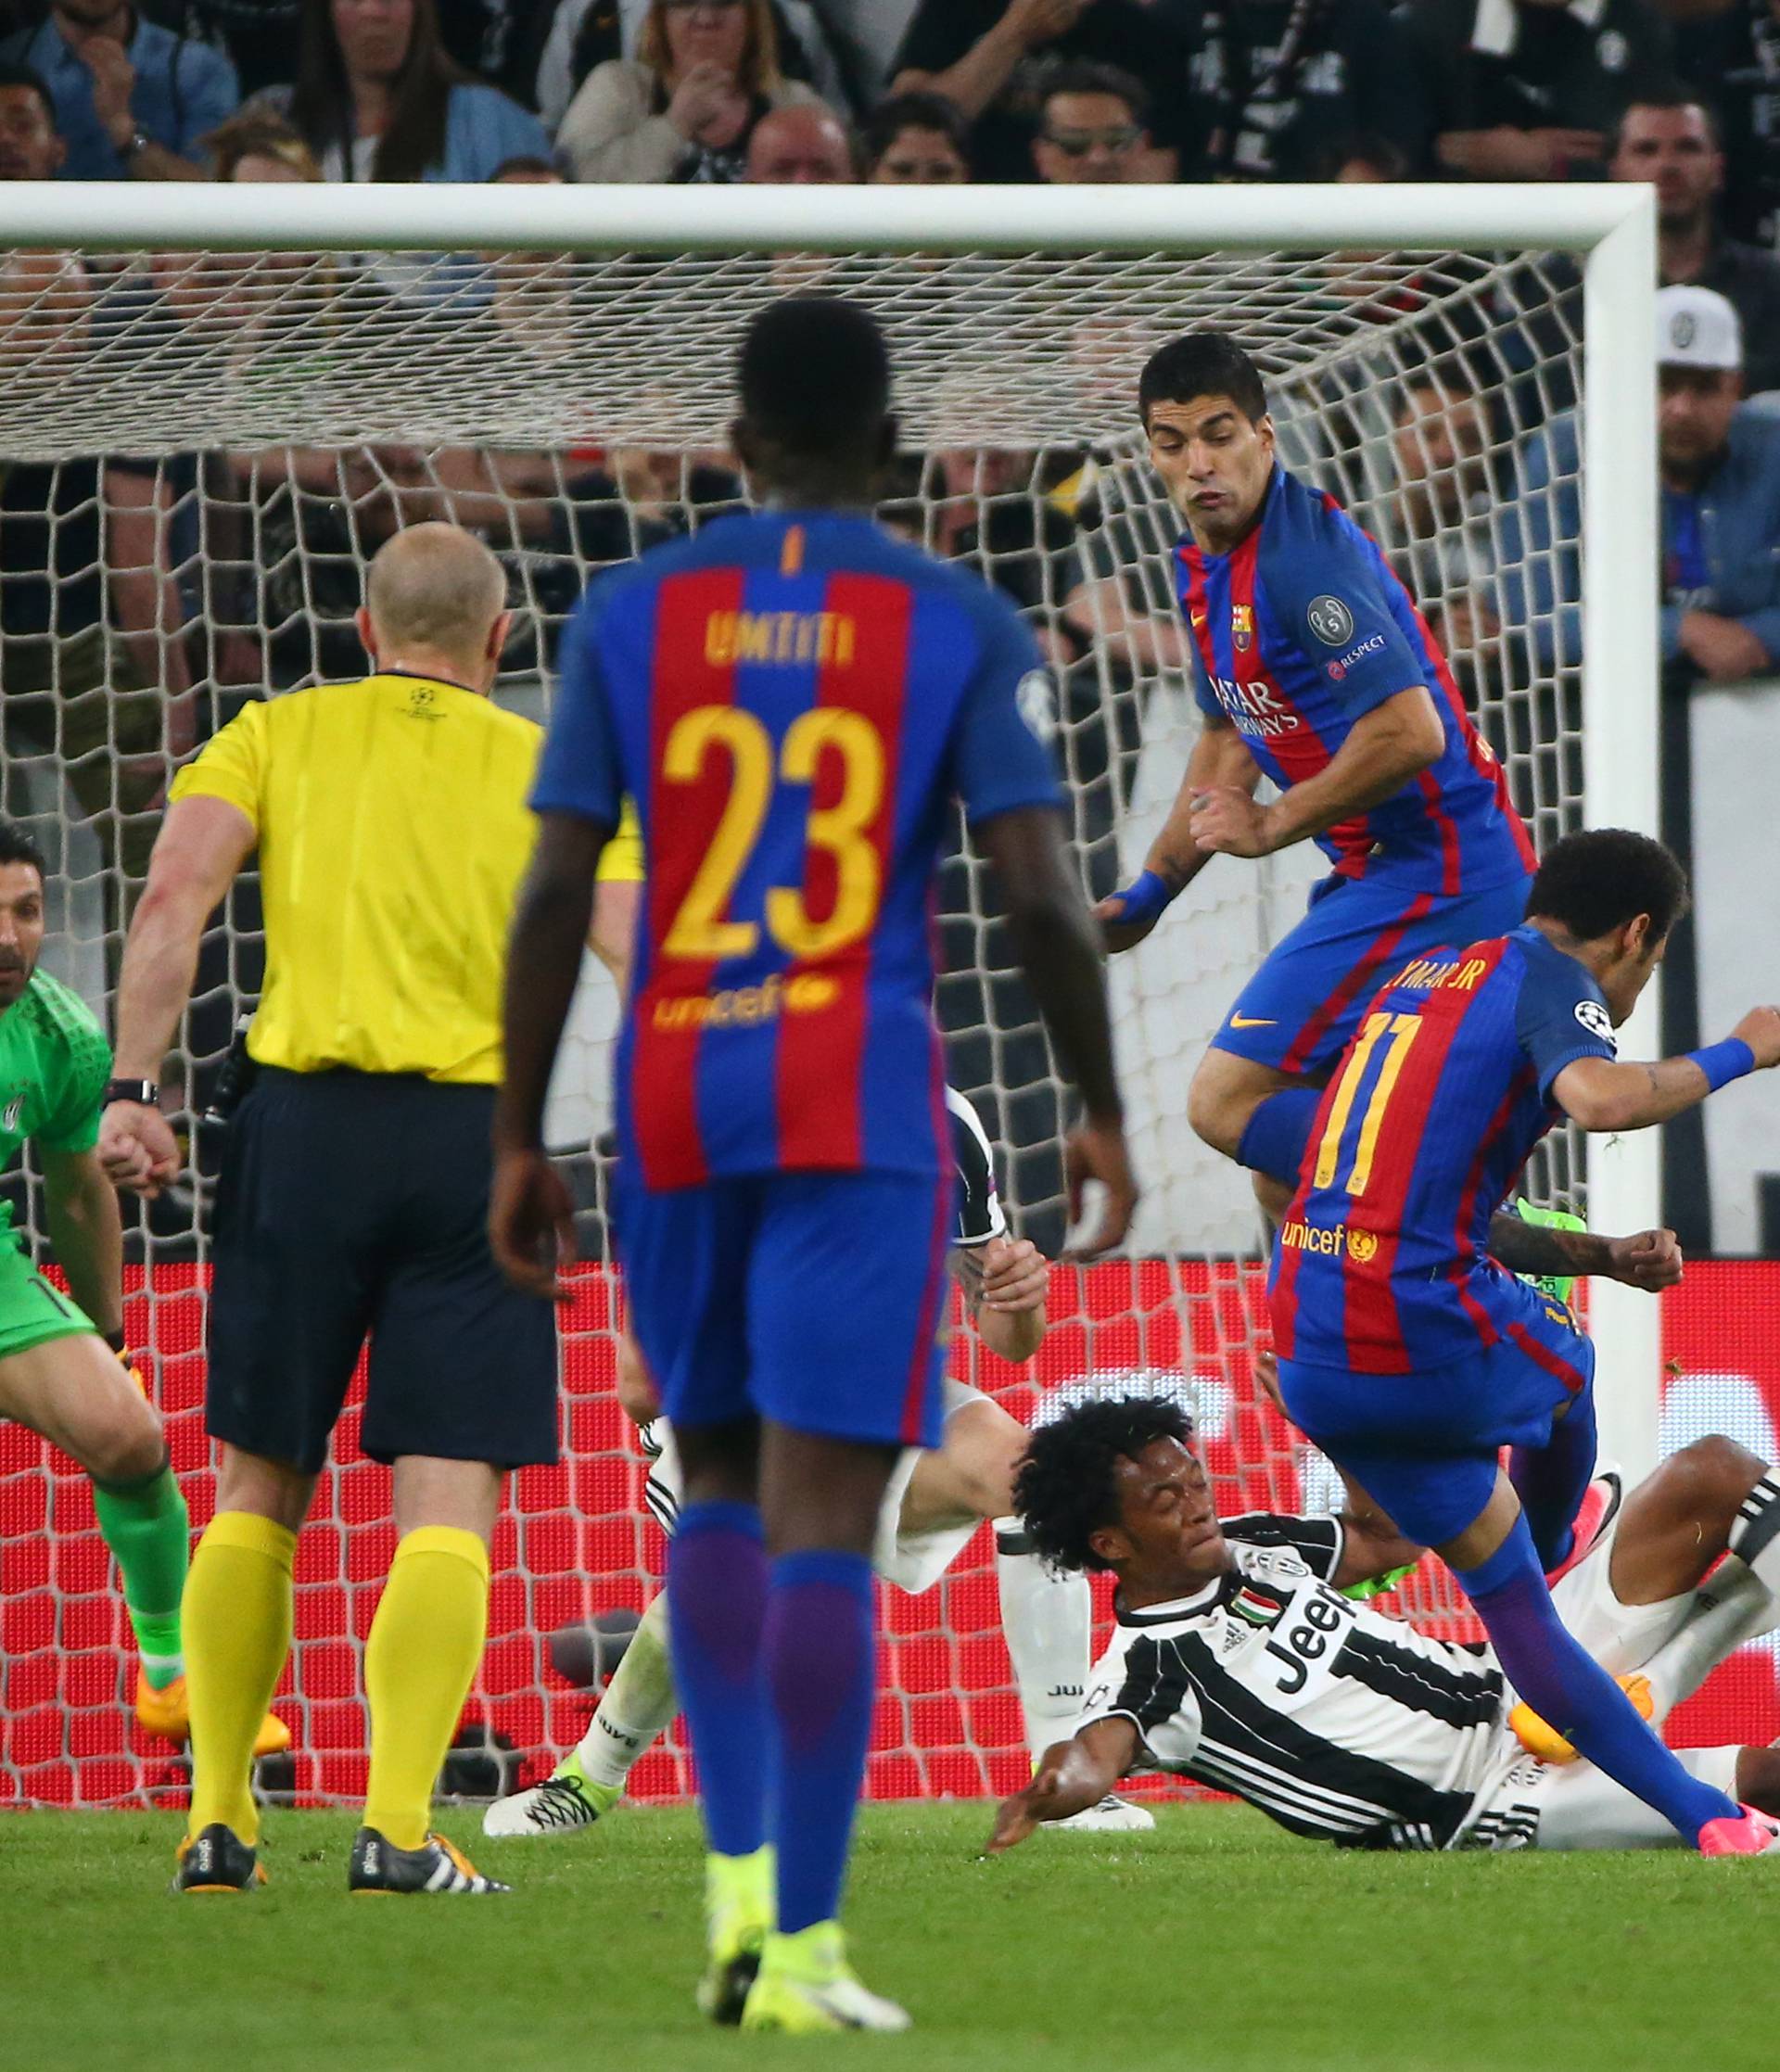 Juventus' Giorgio Chiellini blocks a shot from Barcelona's Neymar